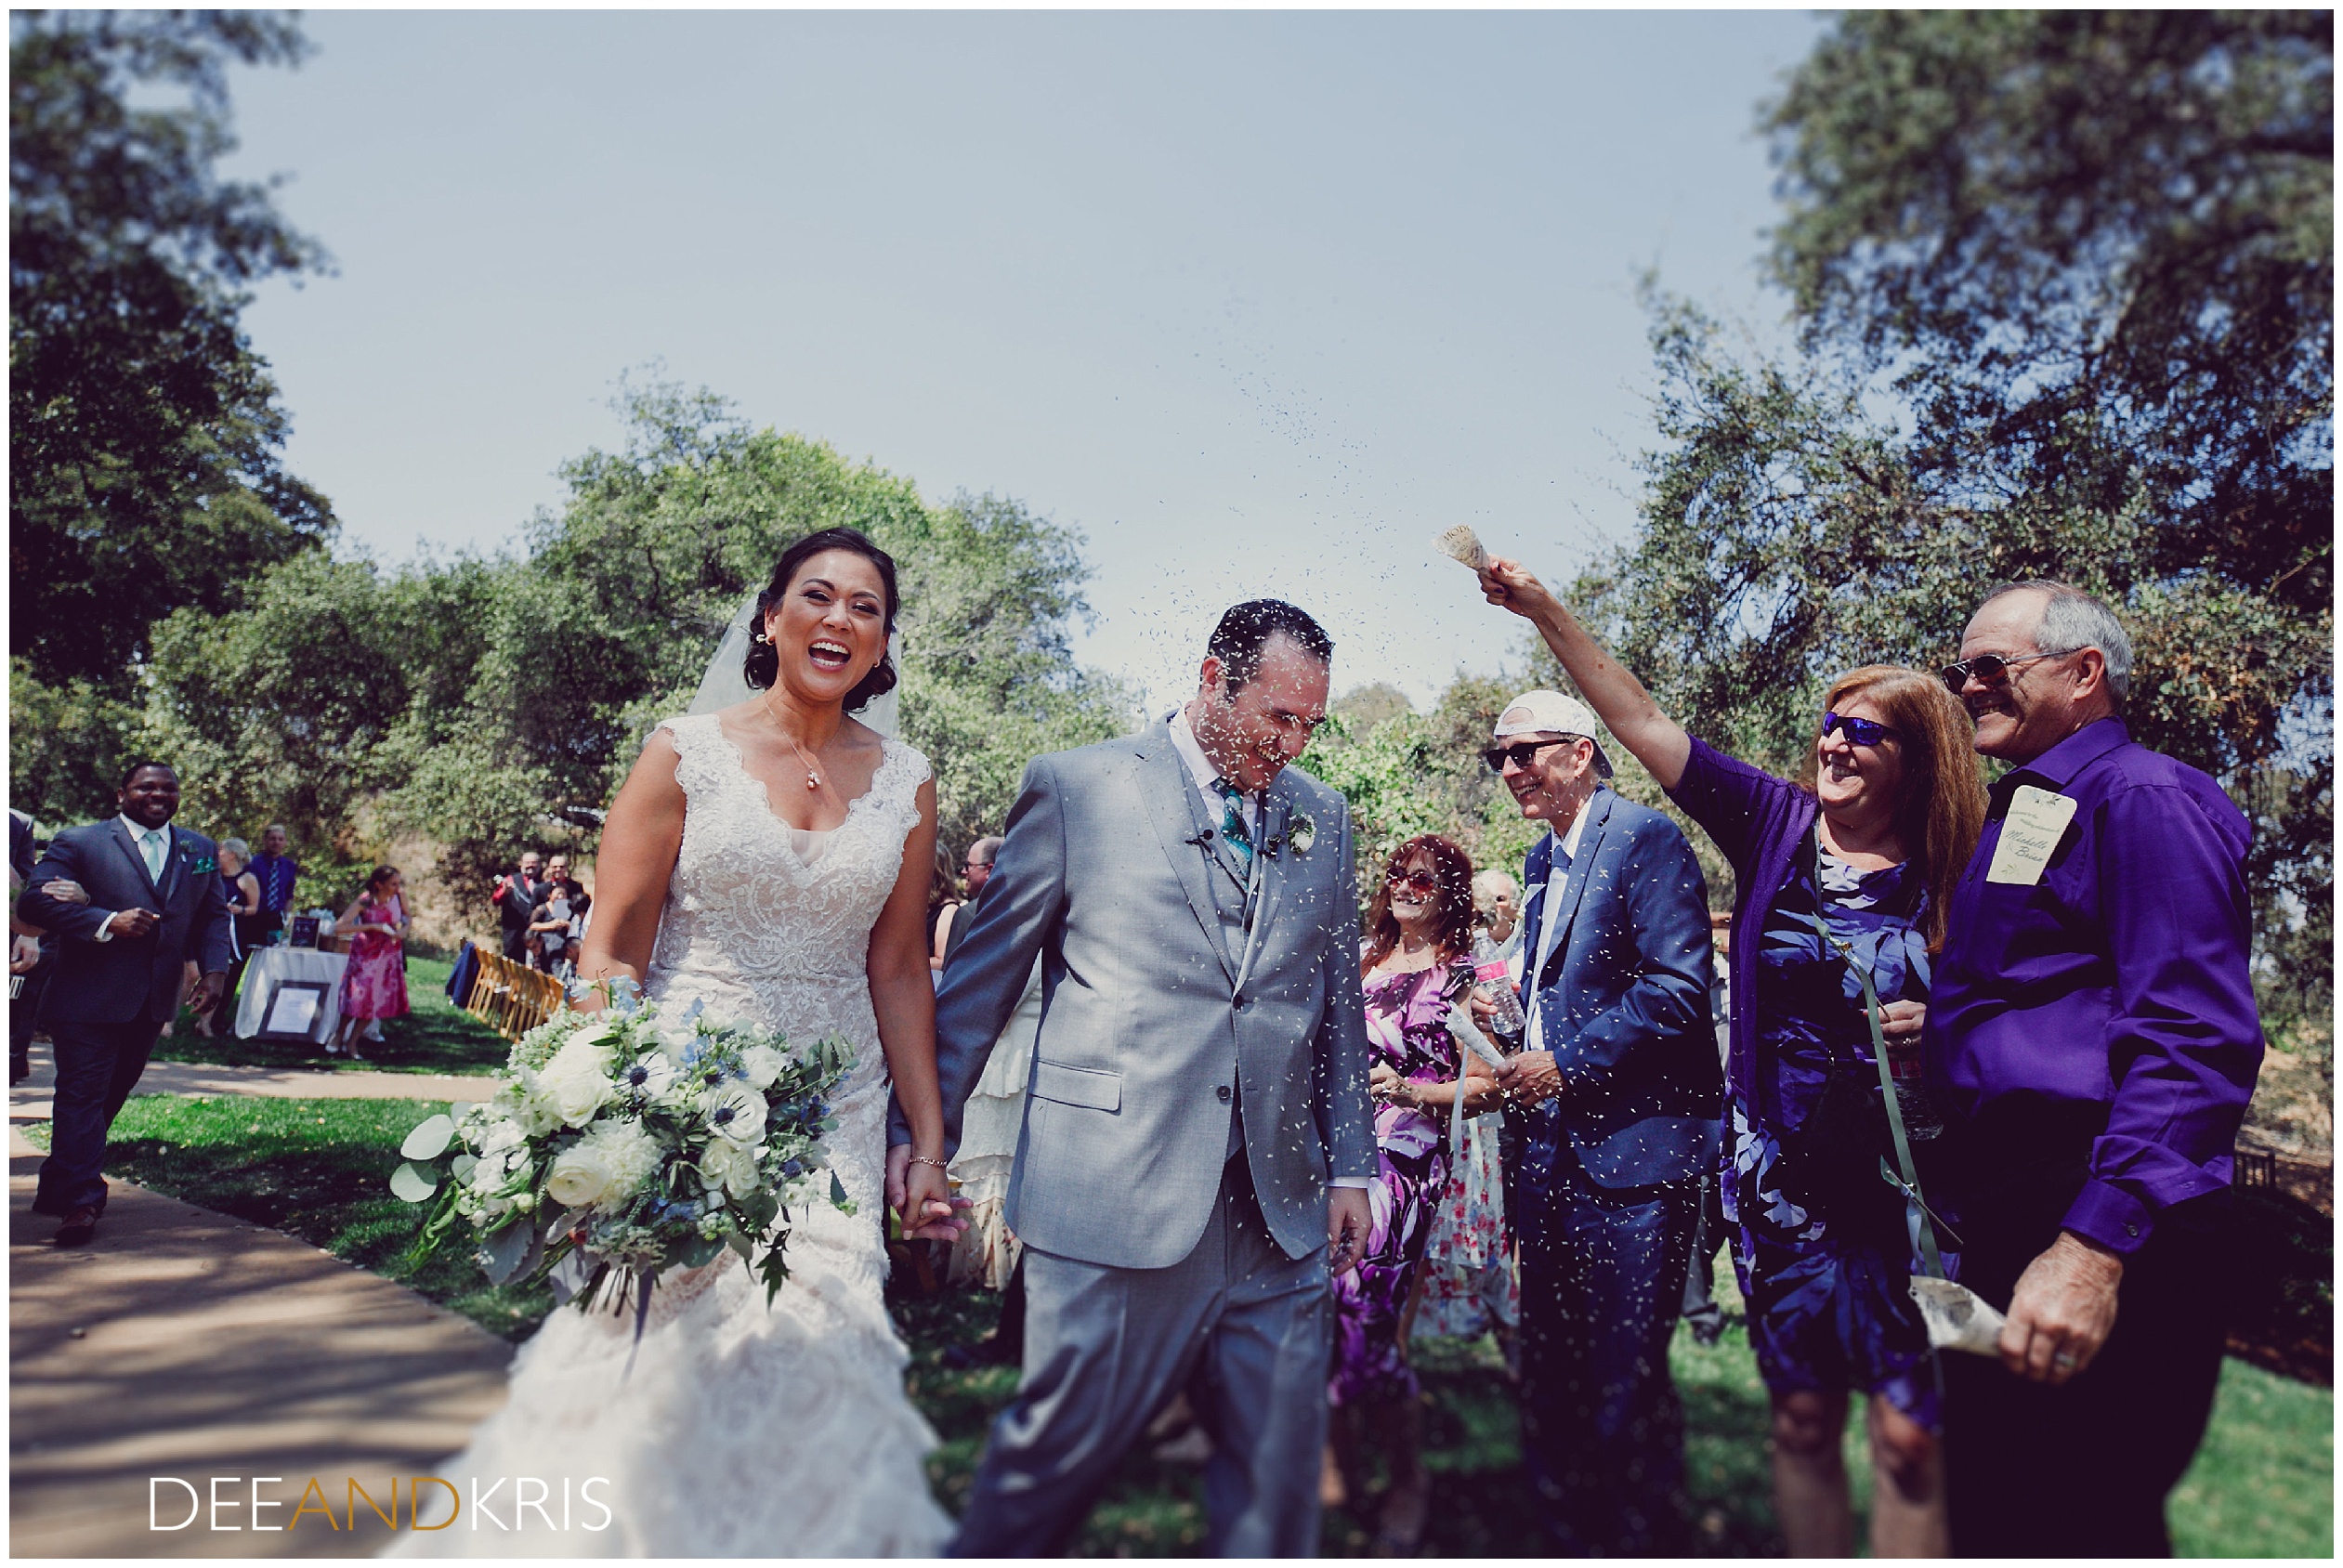 Sacramento wedding photographer photographs wedding ceremony at catta verdera, lavender wedding ceremony, lavender toss at wedding